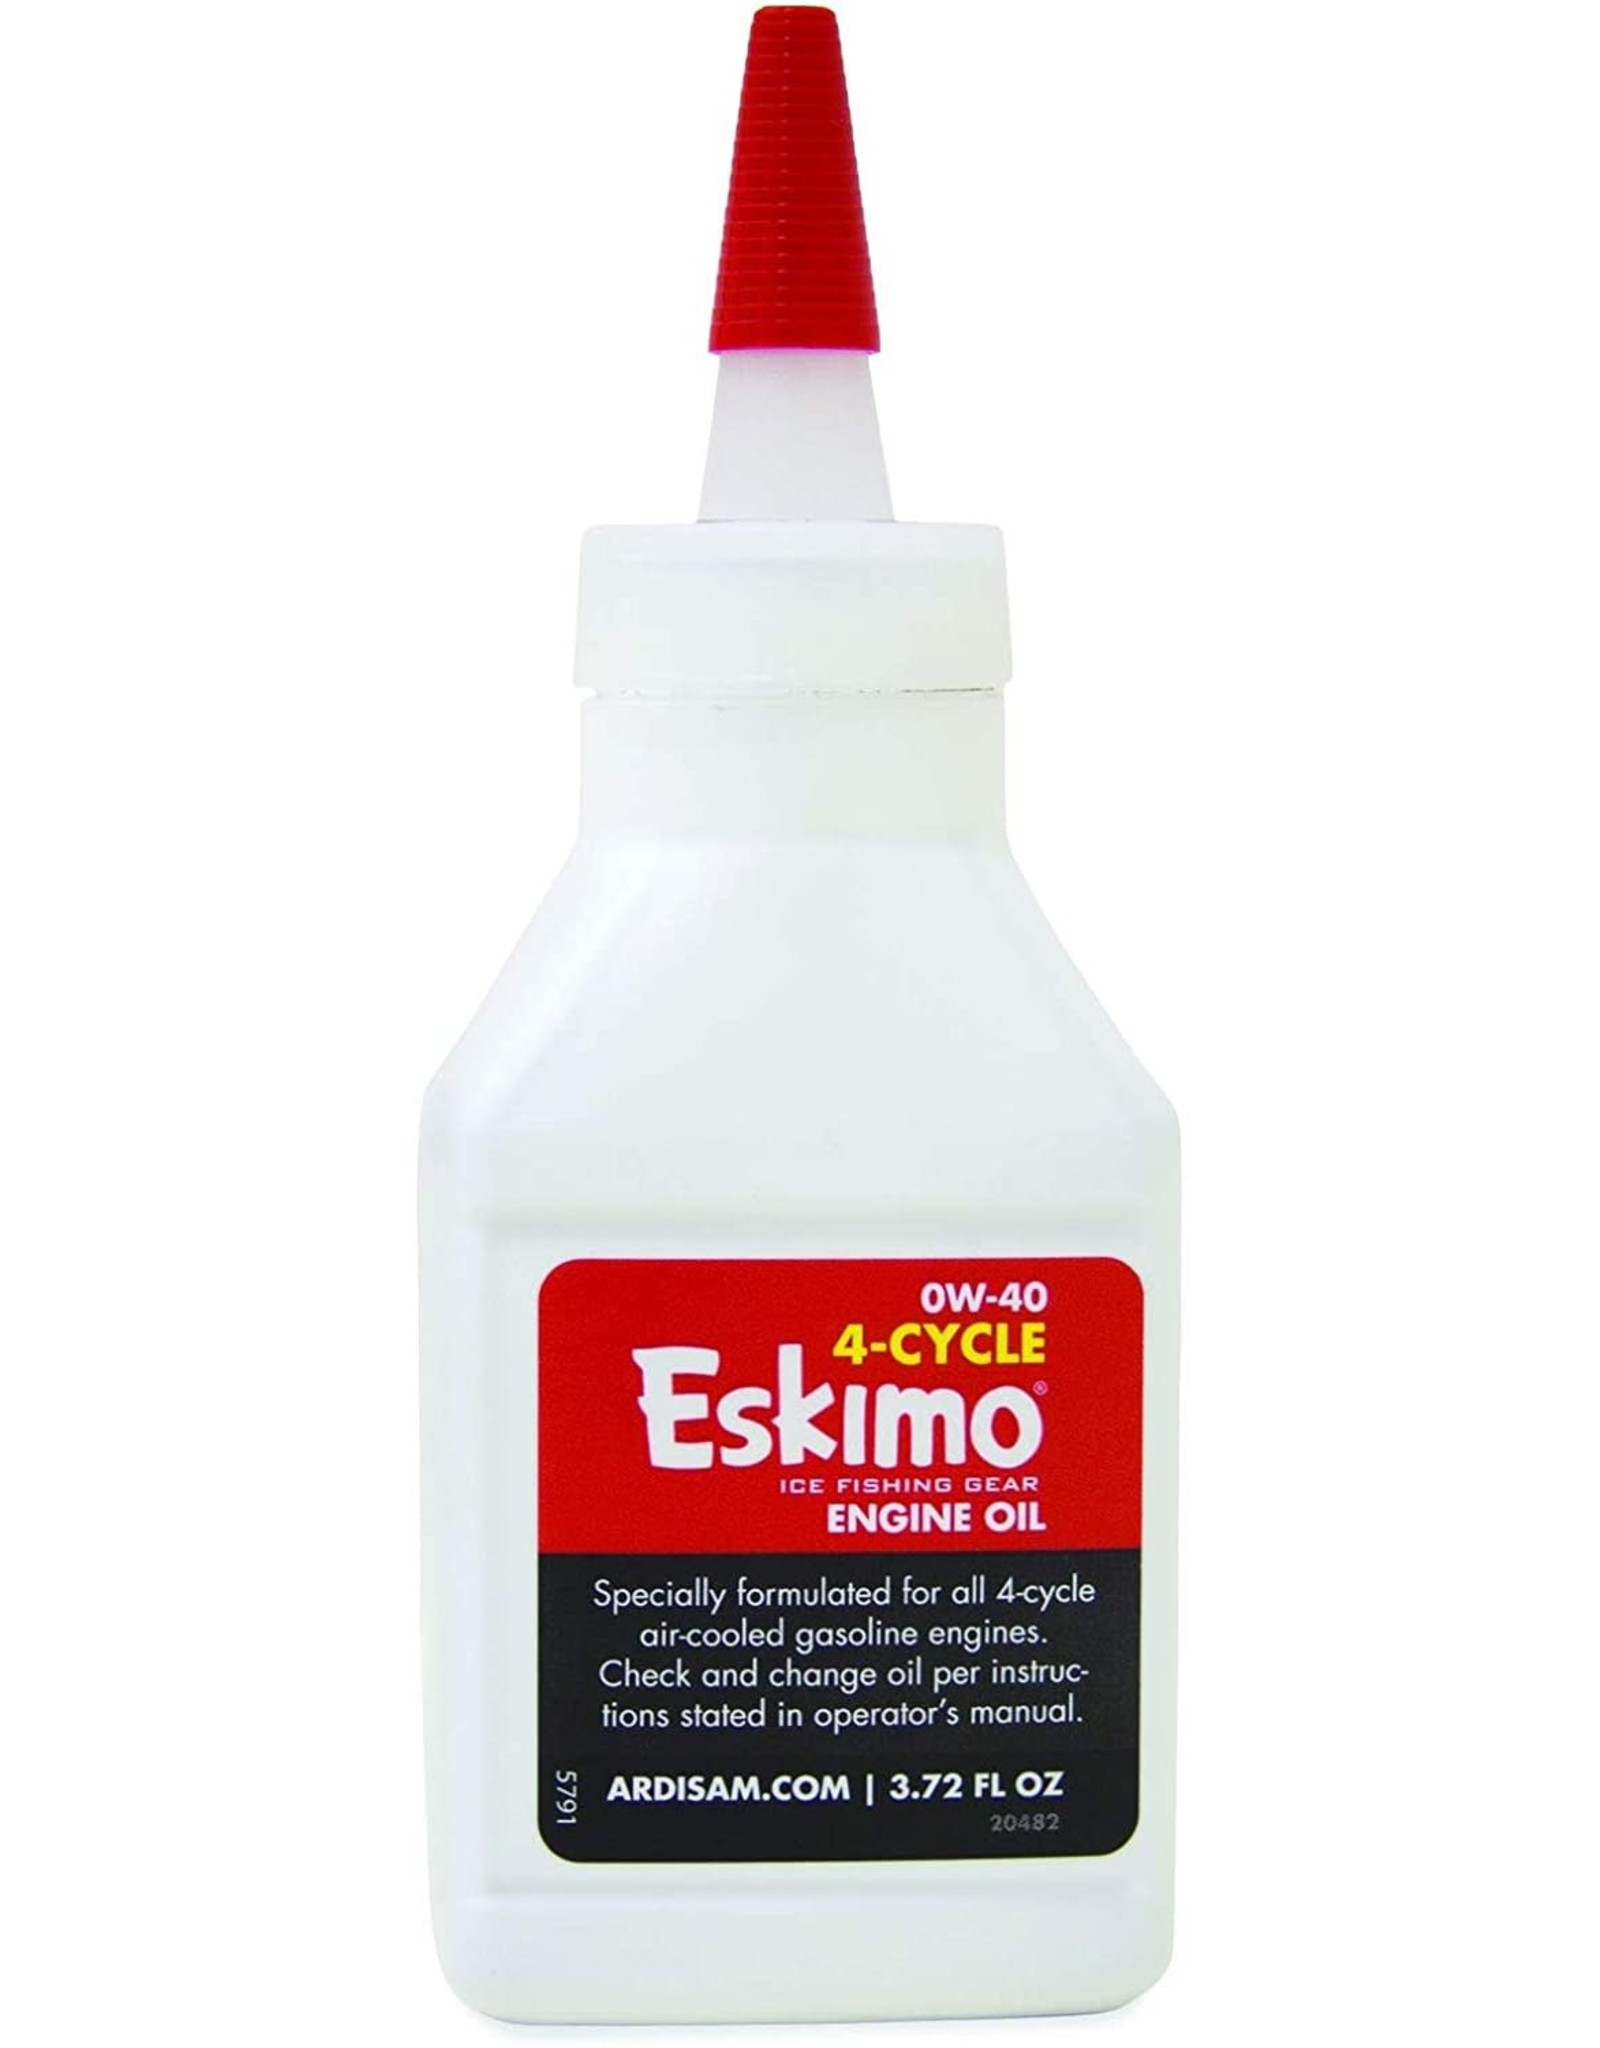 ESKIMO ESK 4-CYCLE ENGINE OIL